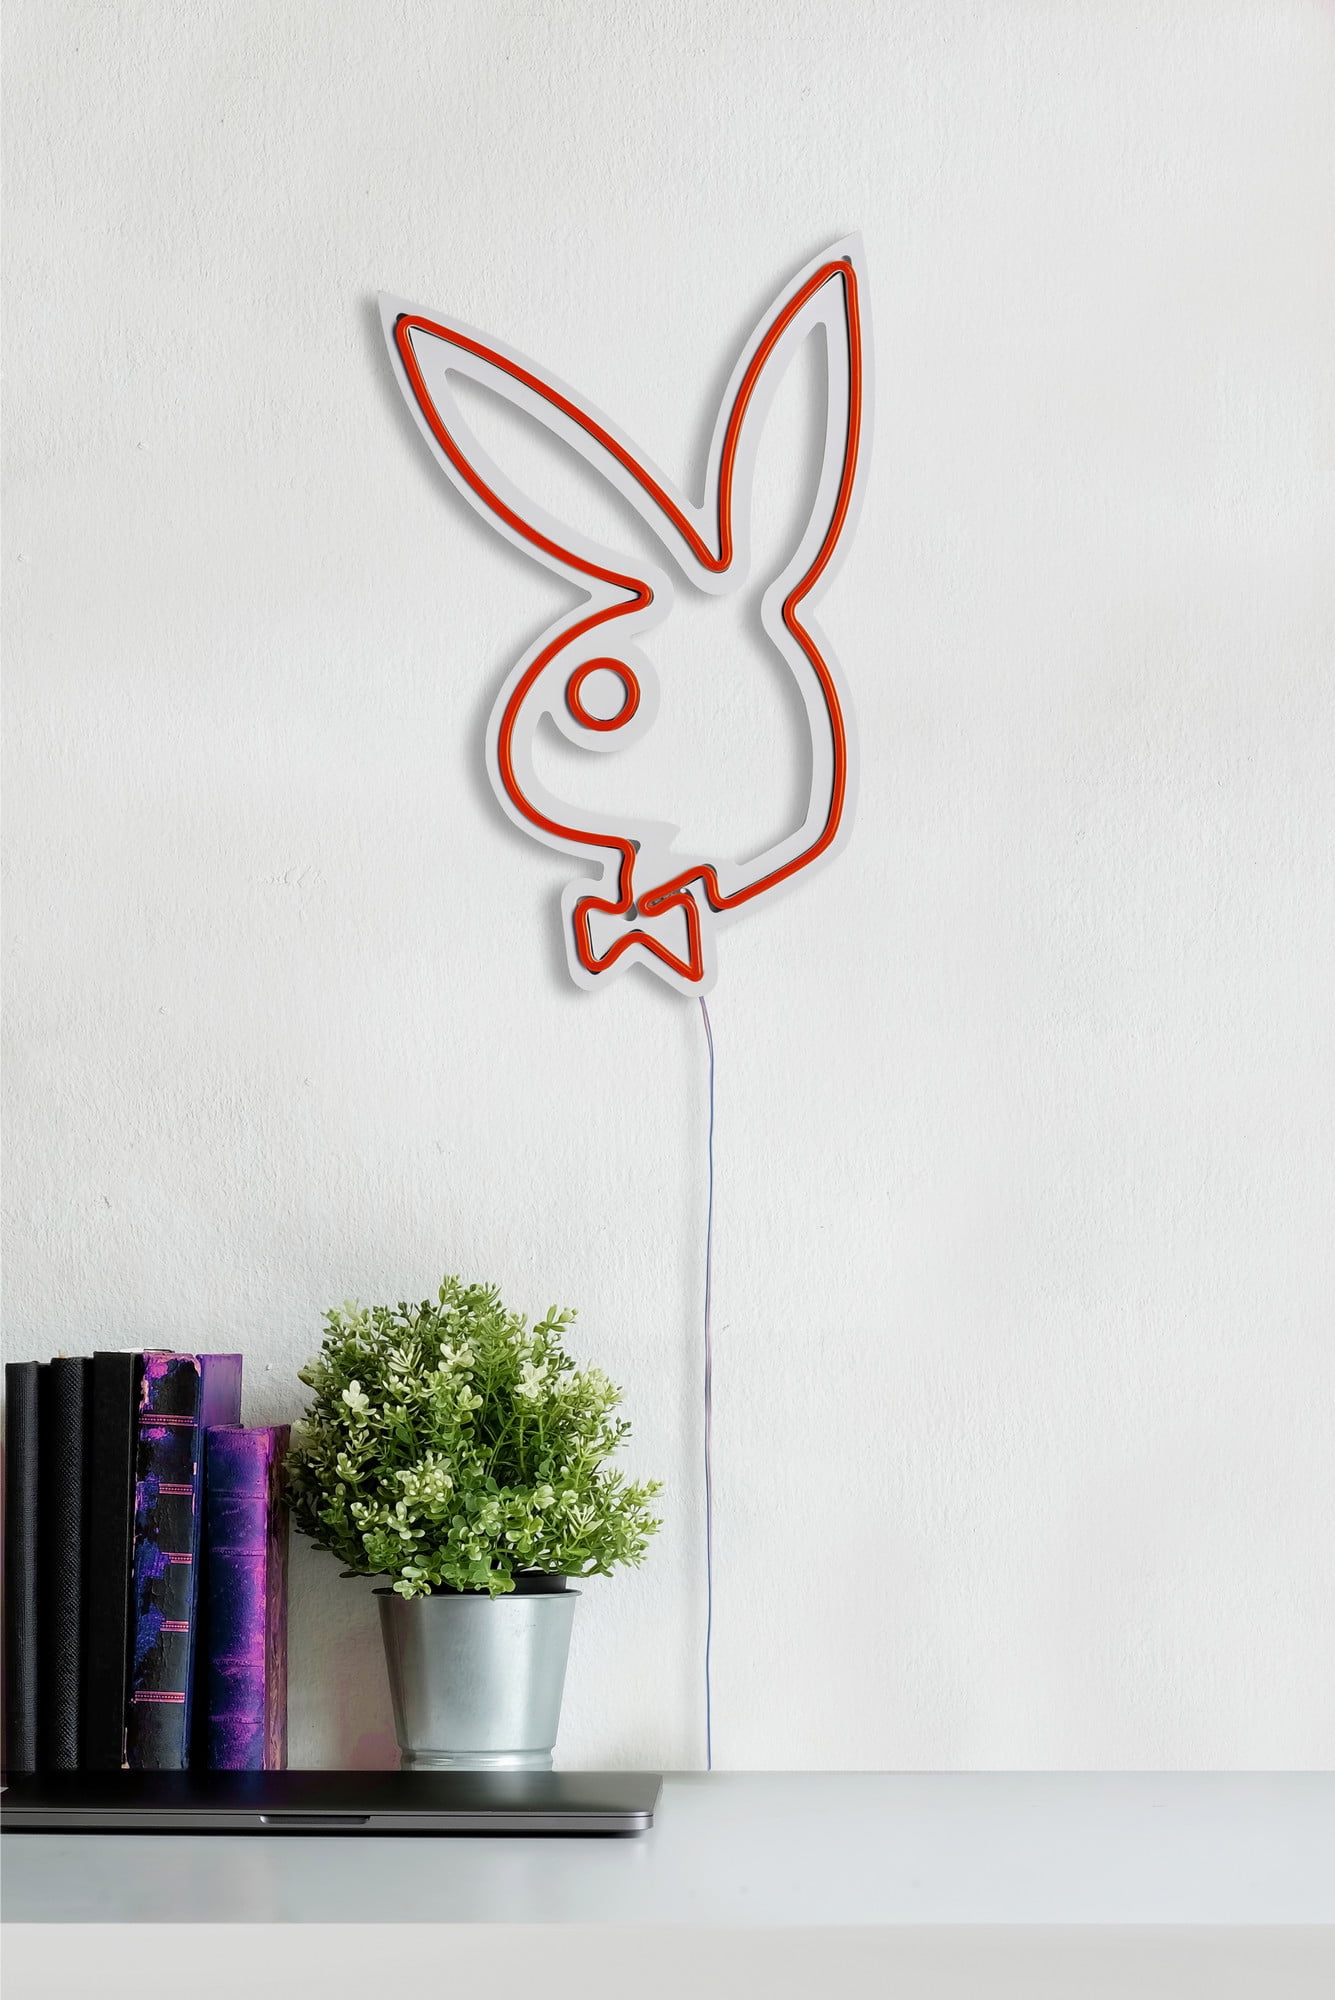 Custom Playboy Bunny LED Neon Sign Light Wall Decor For Bar Living